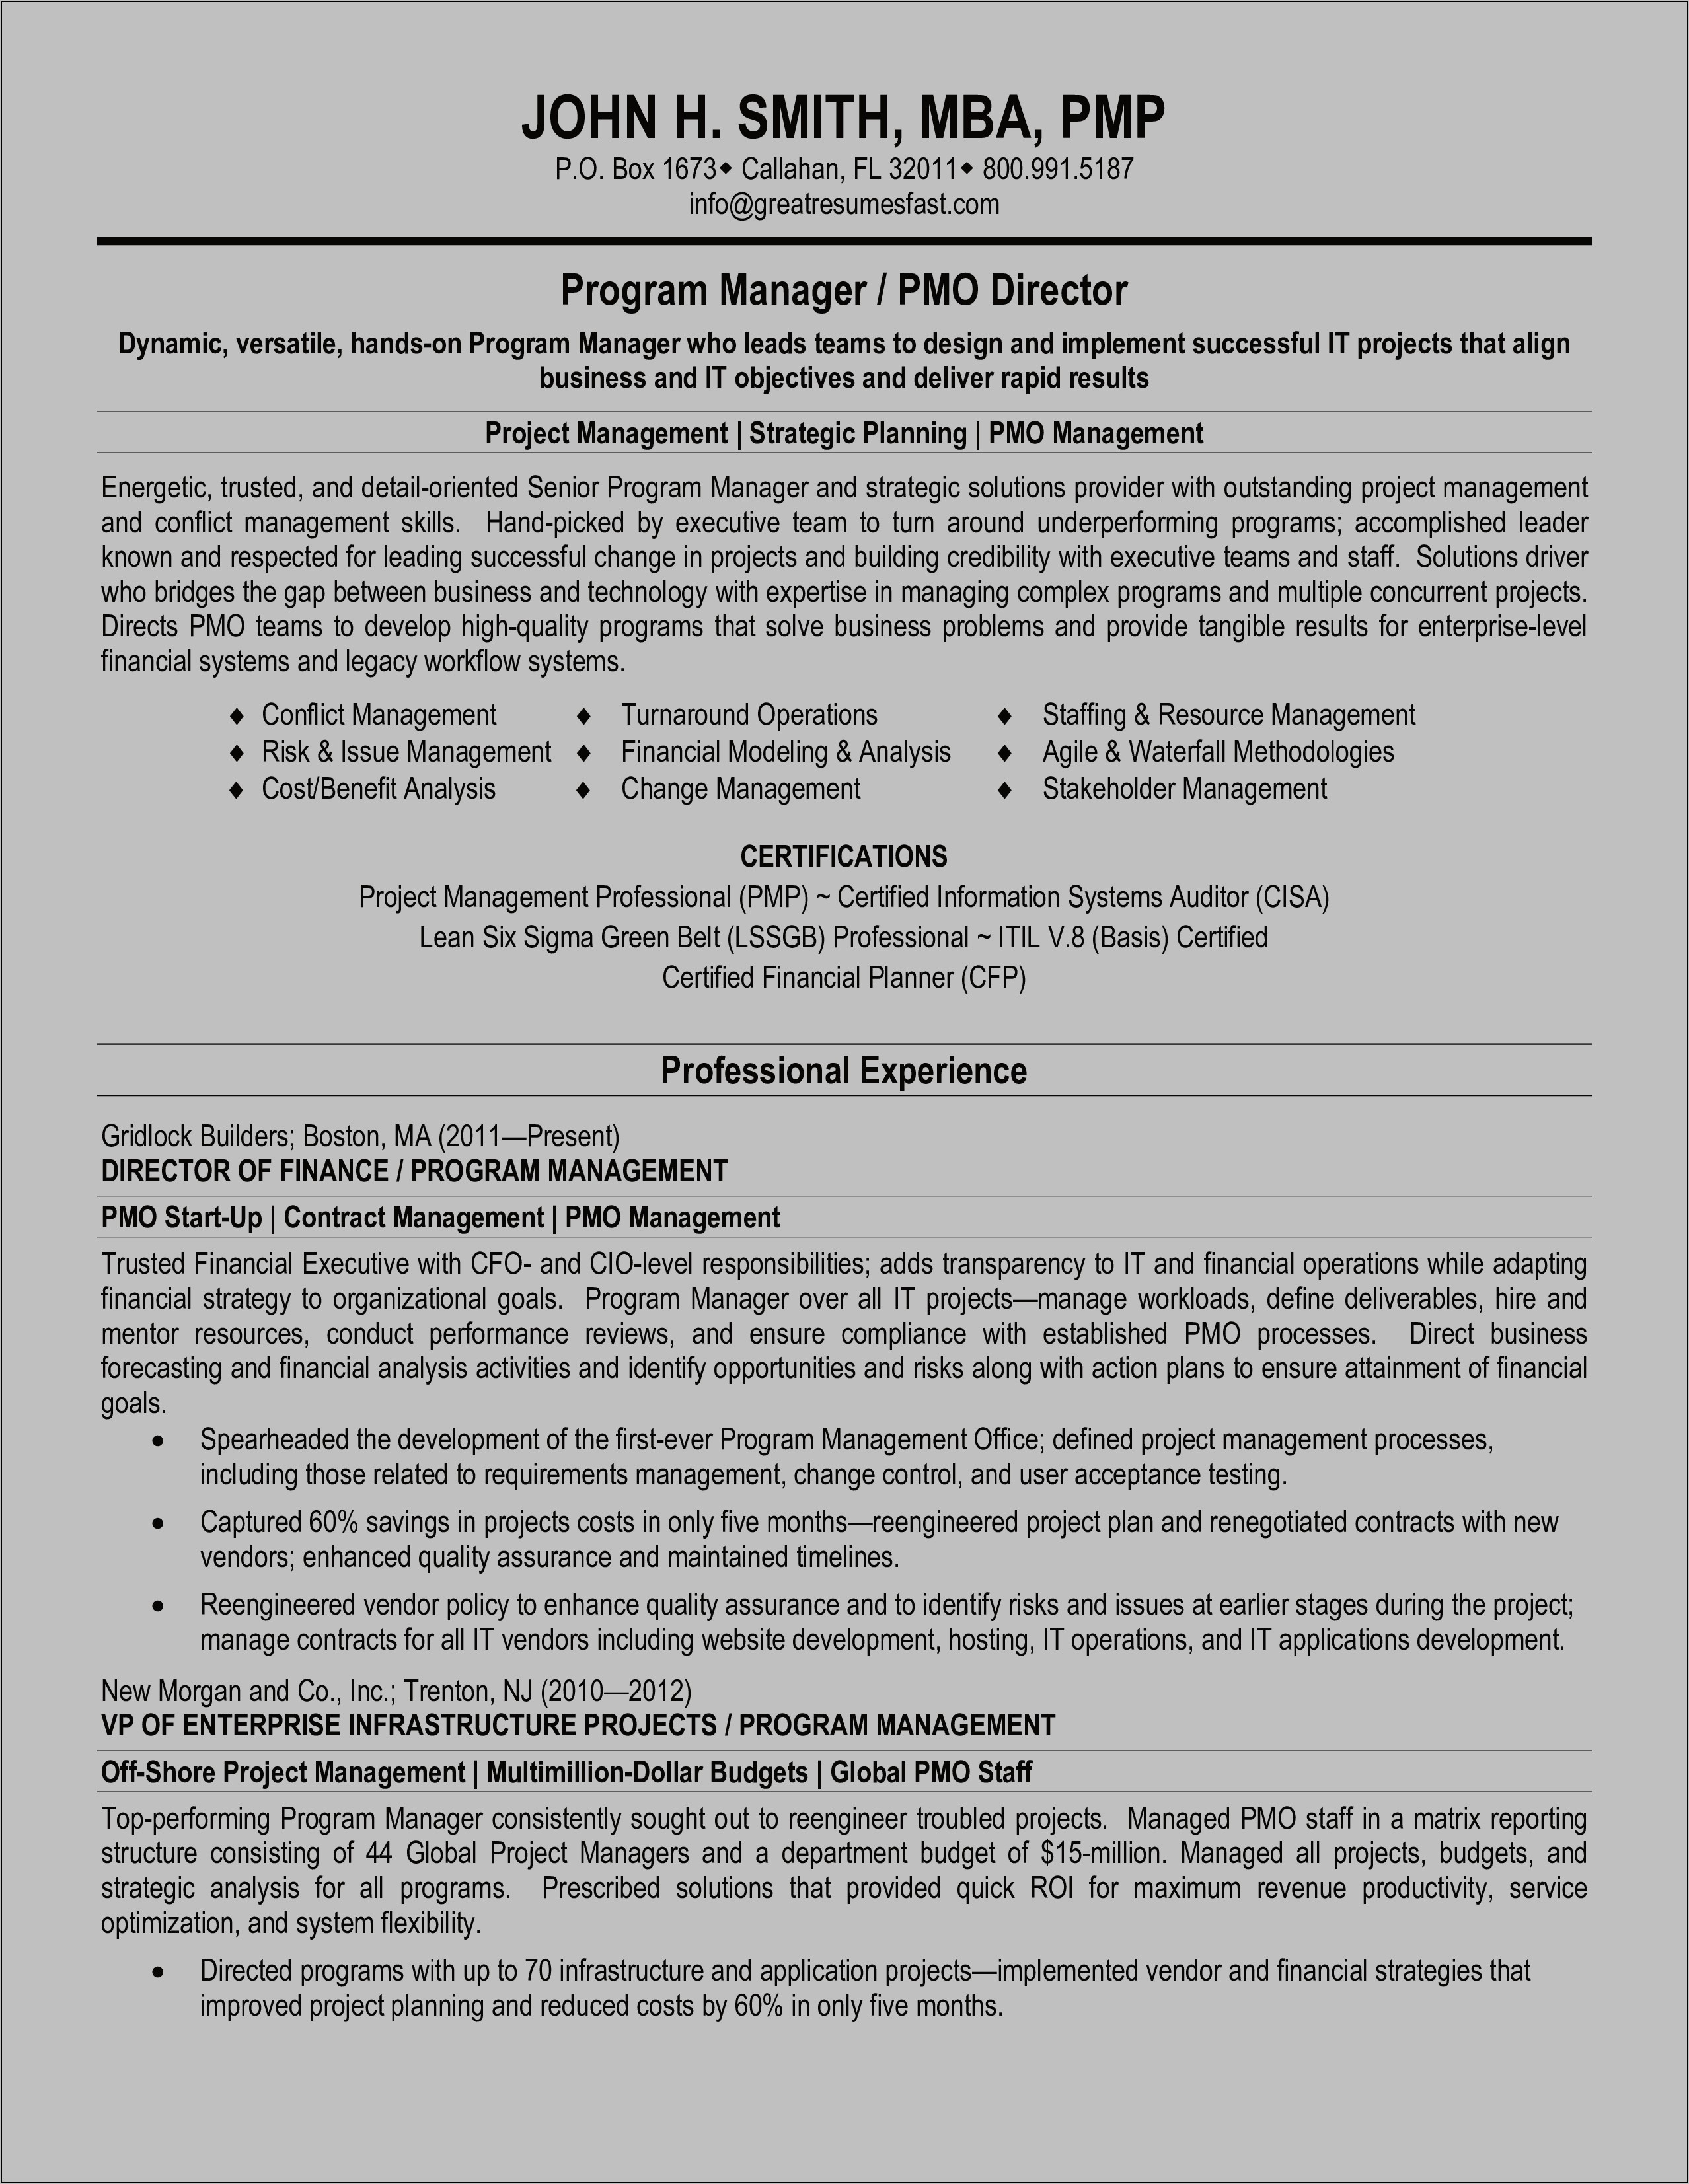 Resume For It Program Manager